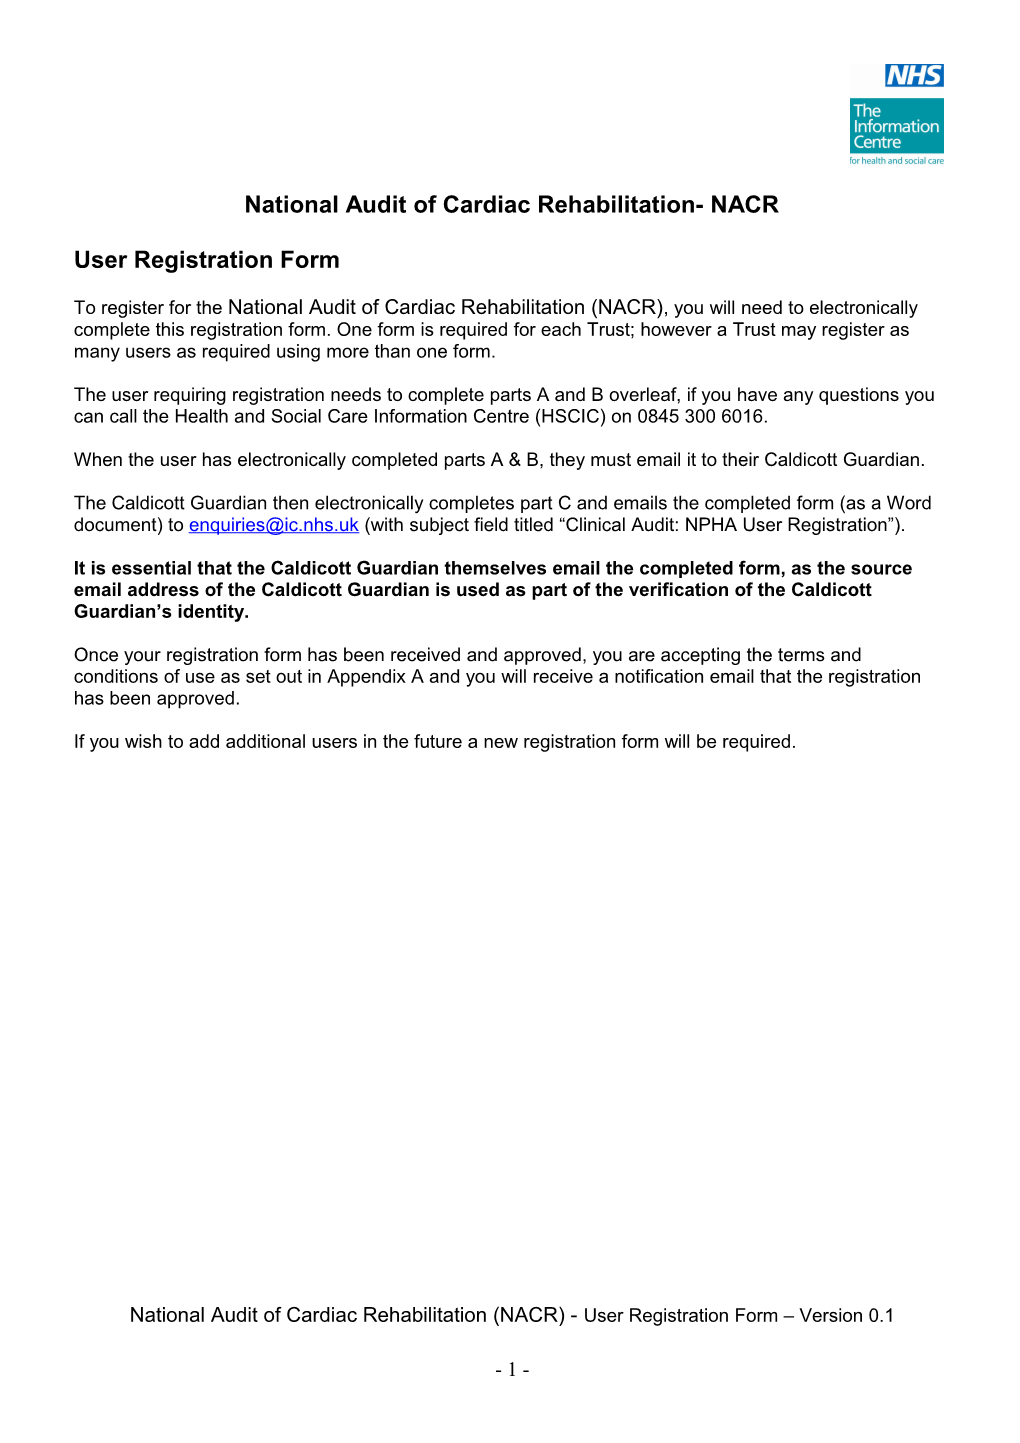 User Registration Form - PH